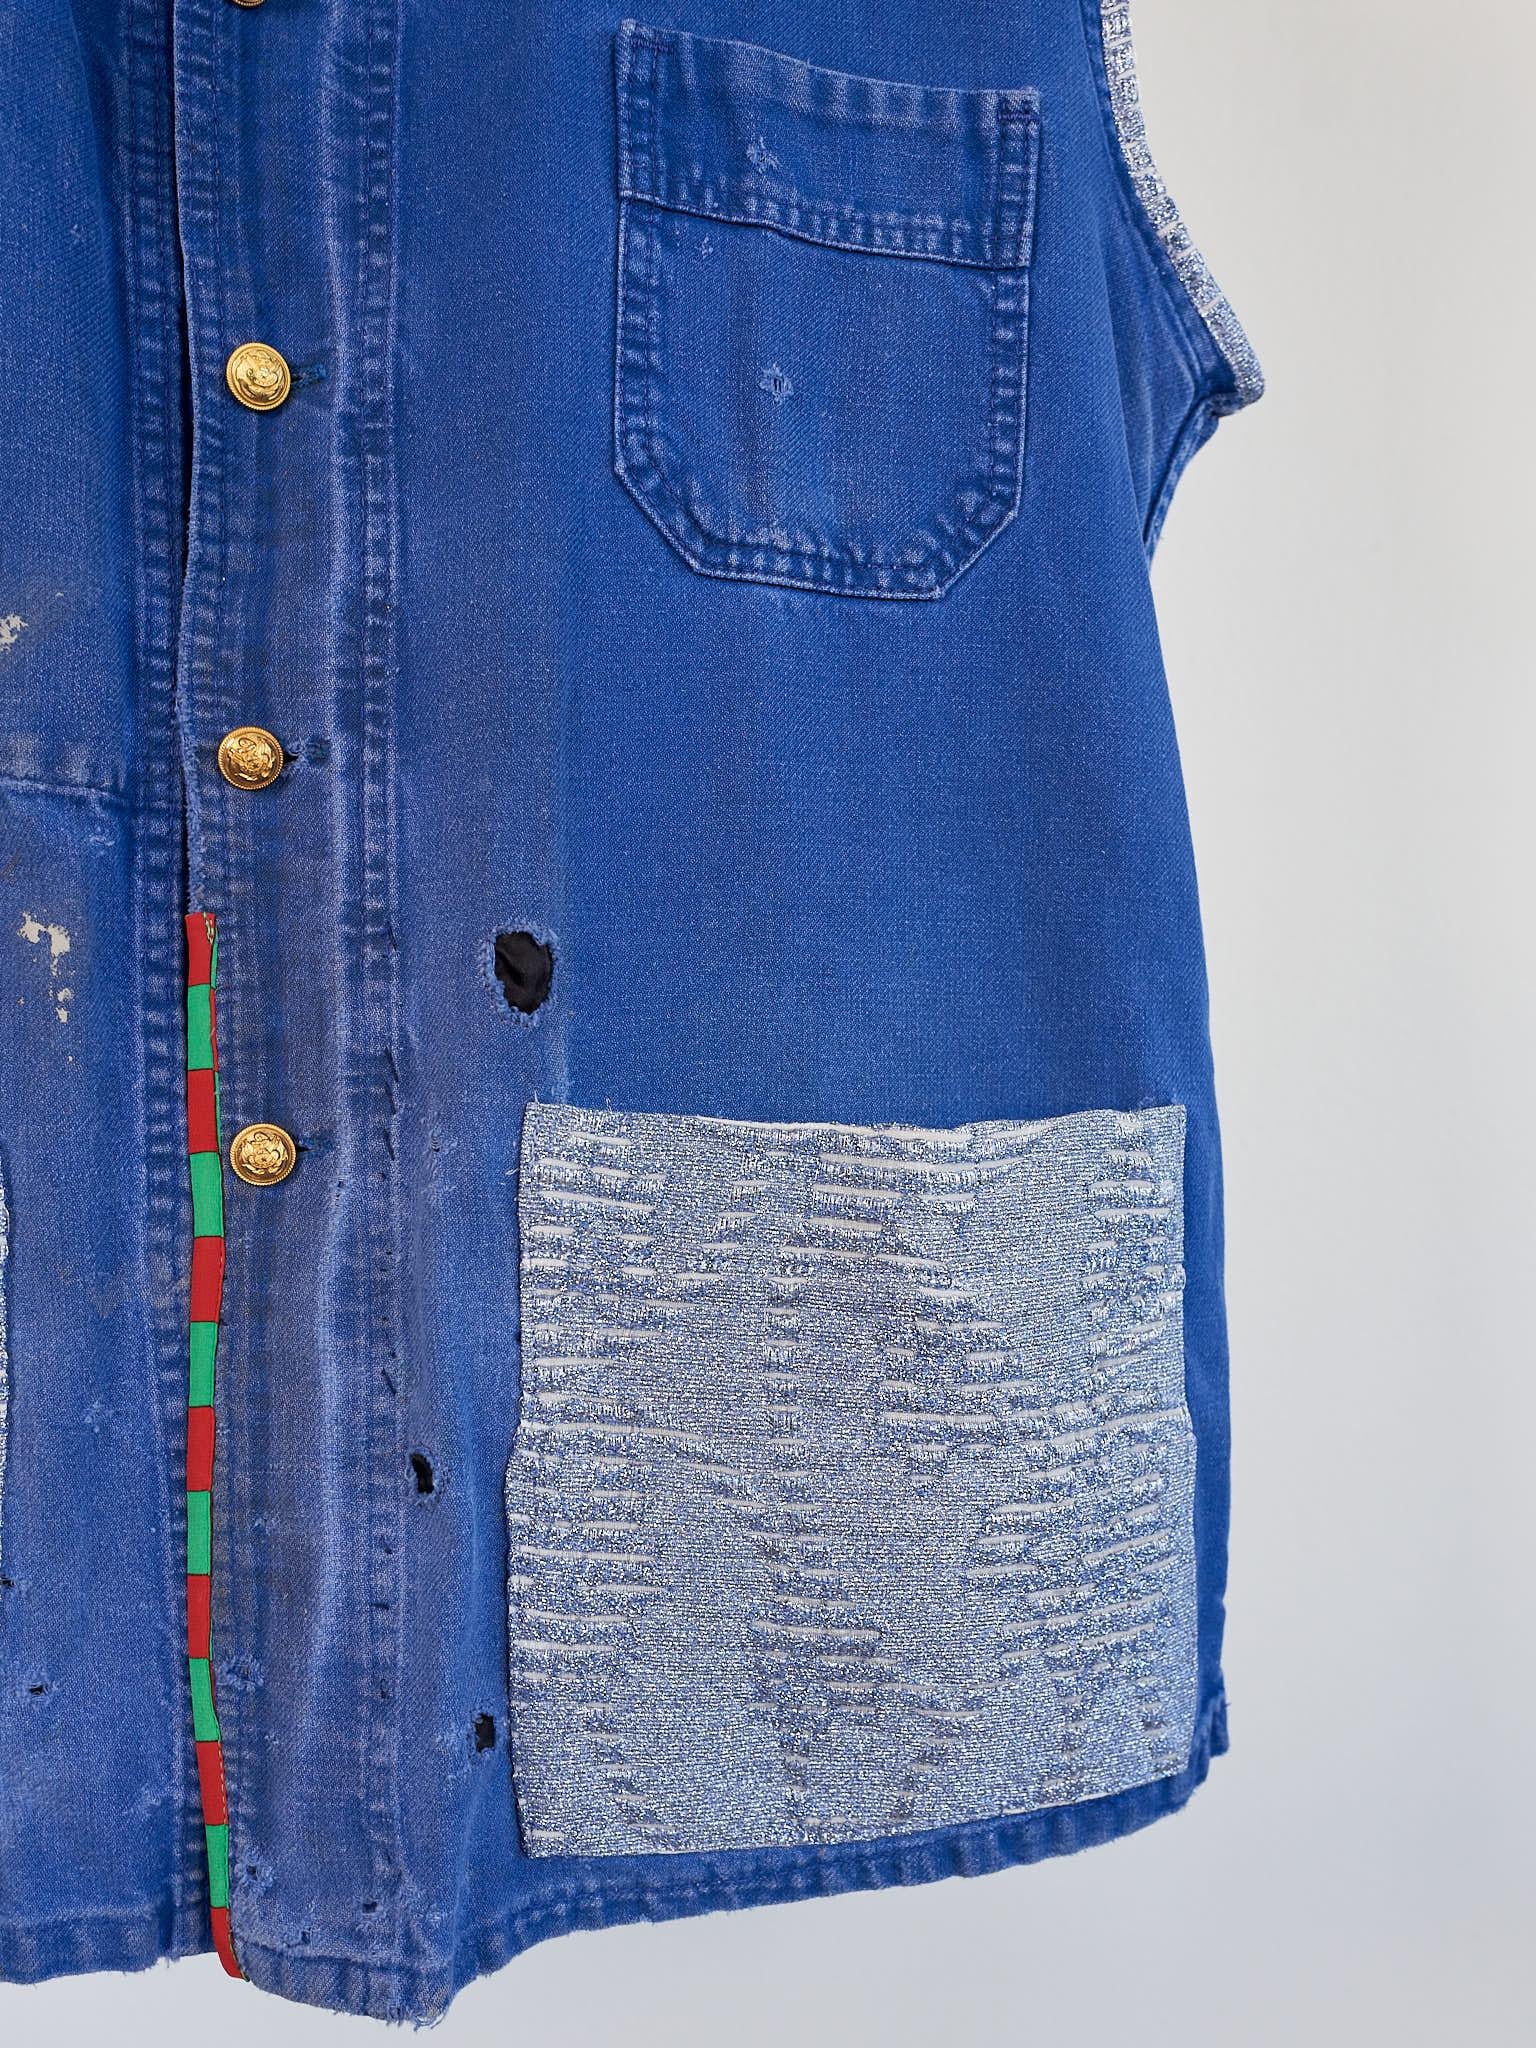 Sleeveless Jacket  Blue French Work Vest Repurposed Vintage Glitter Large 2